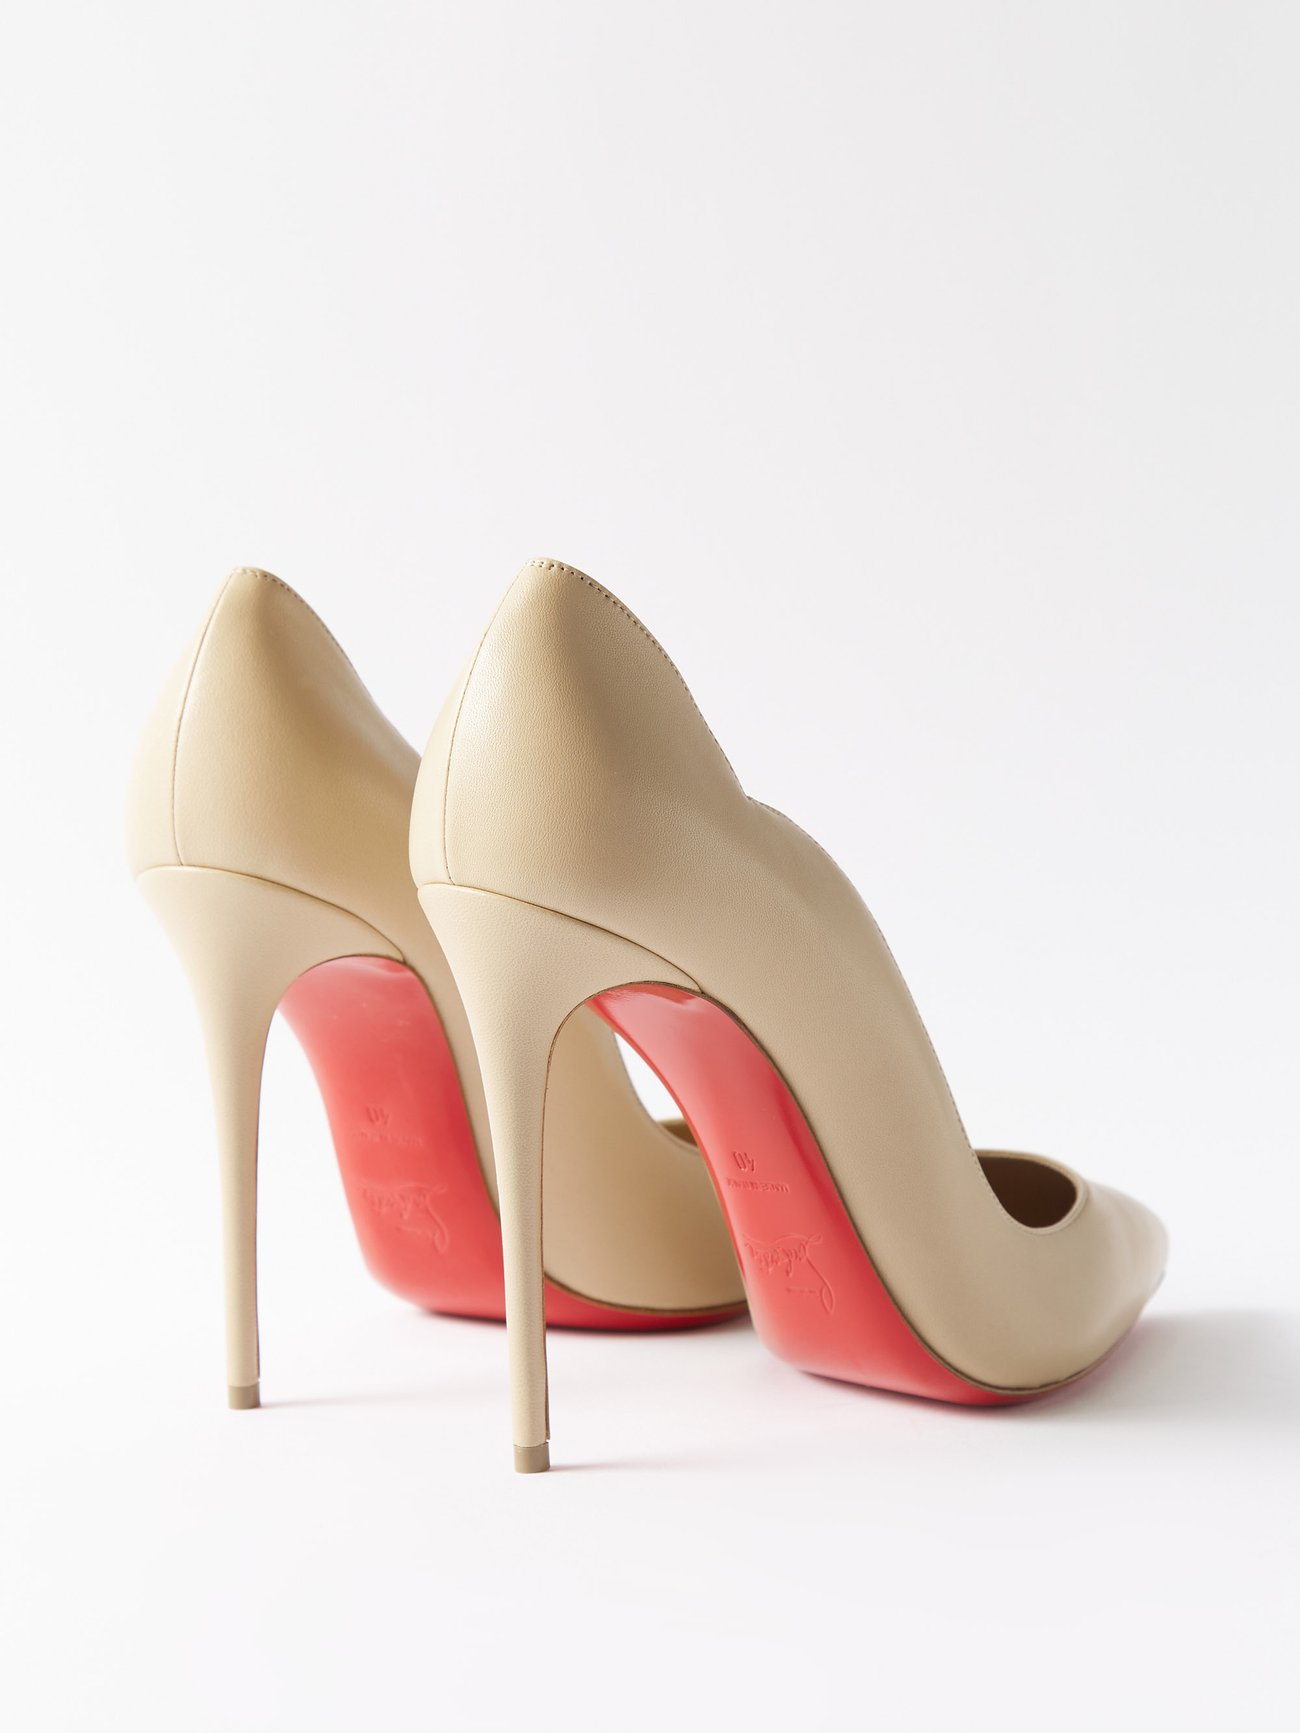 Christian Louboutin Hot Chick 100 Beige Patent Scalloped Heels NEW $795  Size 34